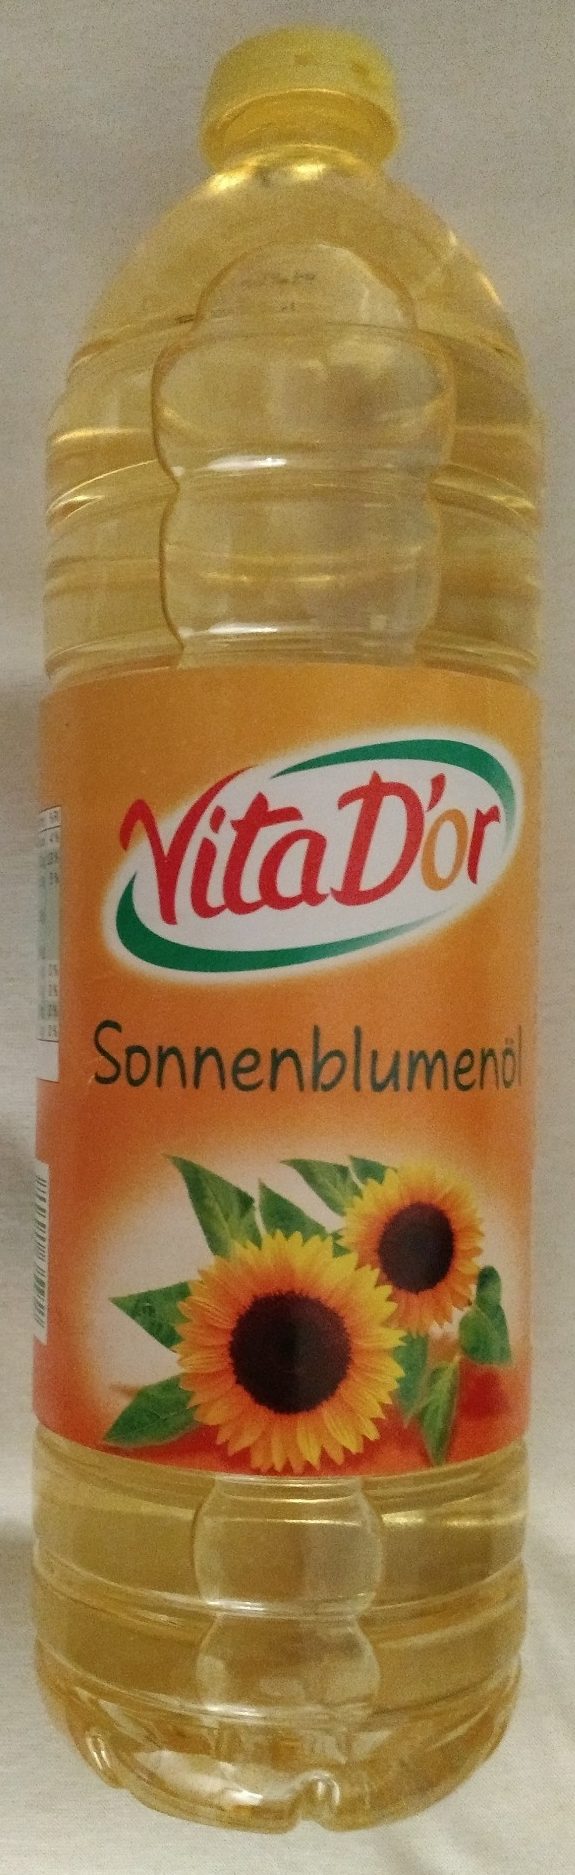 Sonnenblumenöl Vita D'or - Produkt